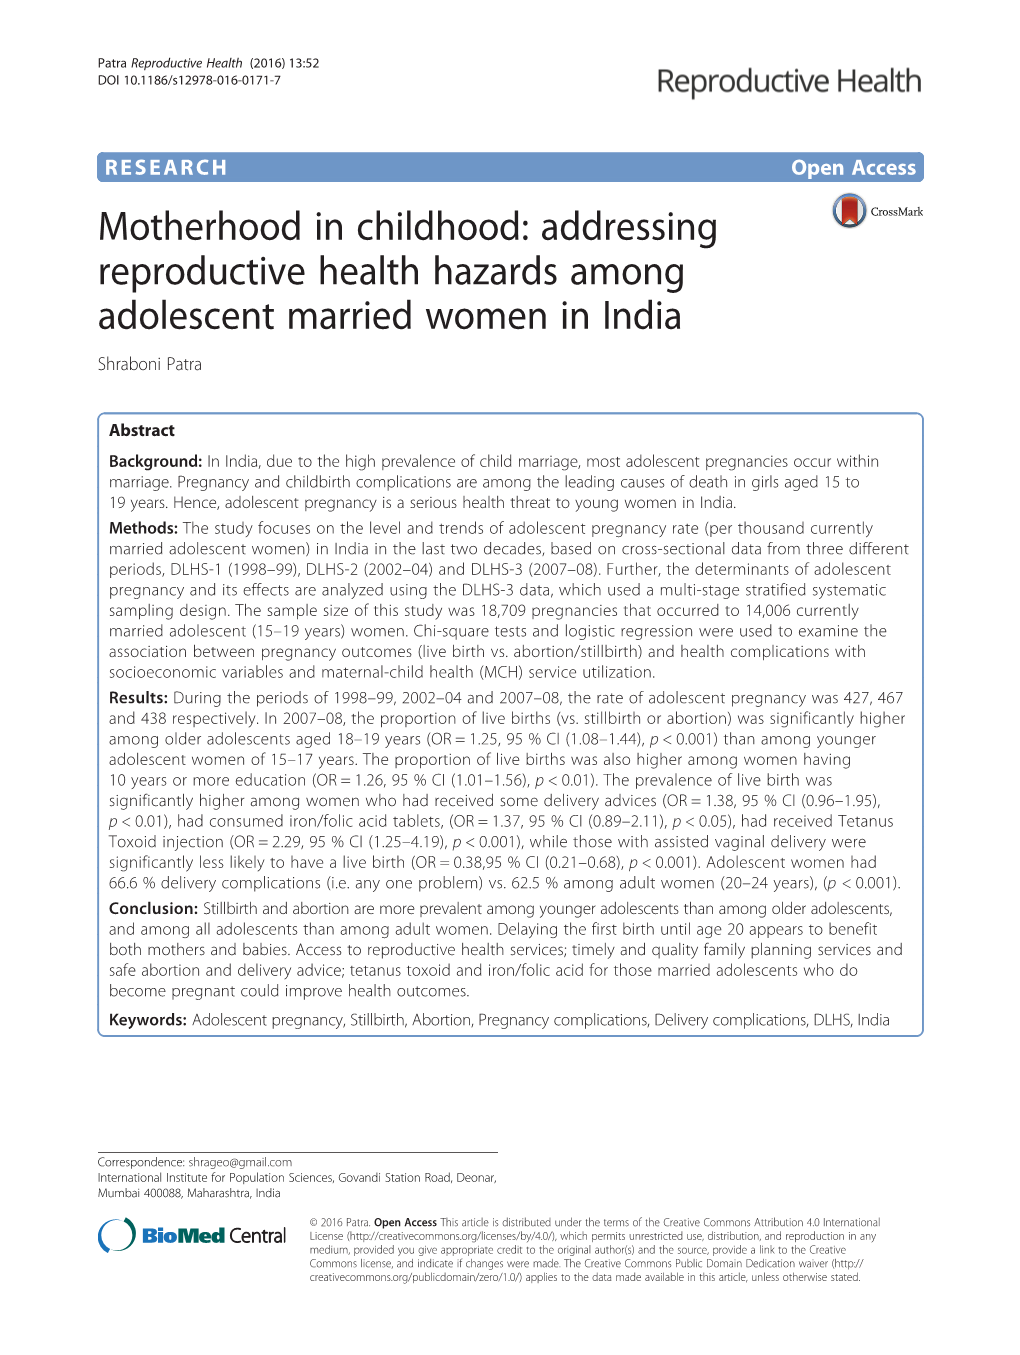 Addressing Reproductive Health Hazards Among Adolescent Married Women in India Shraboni Patra